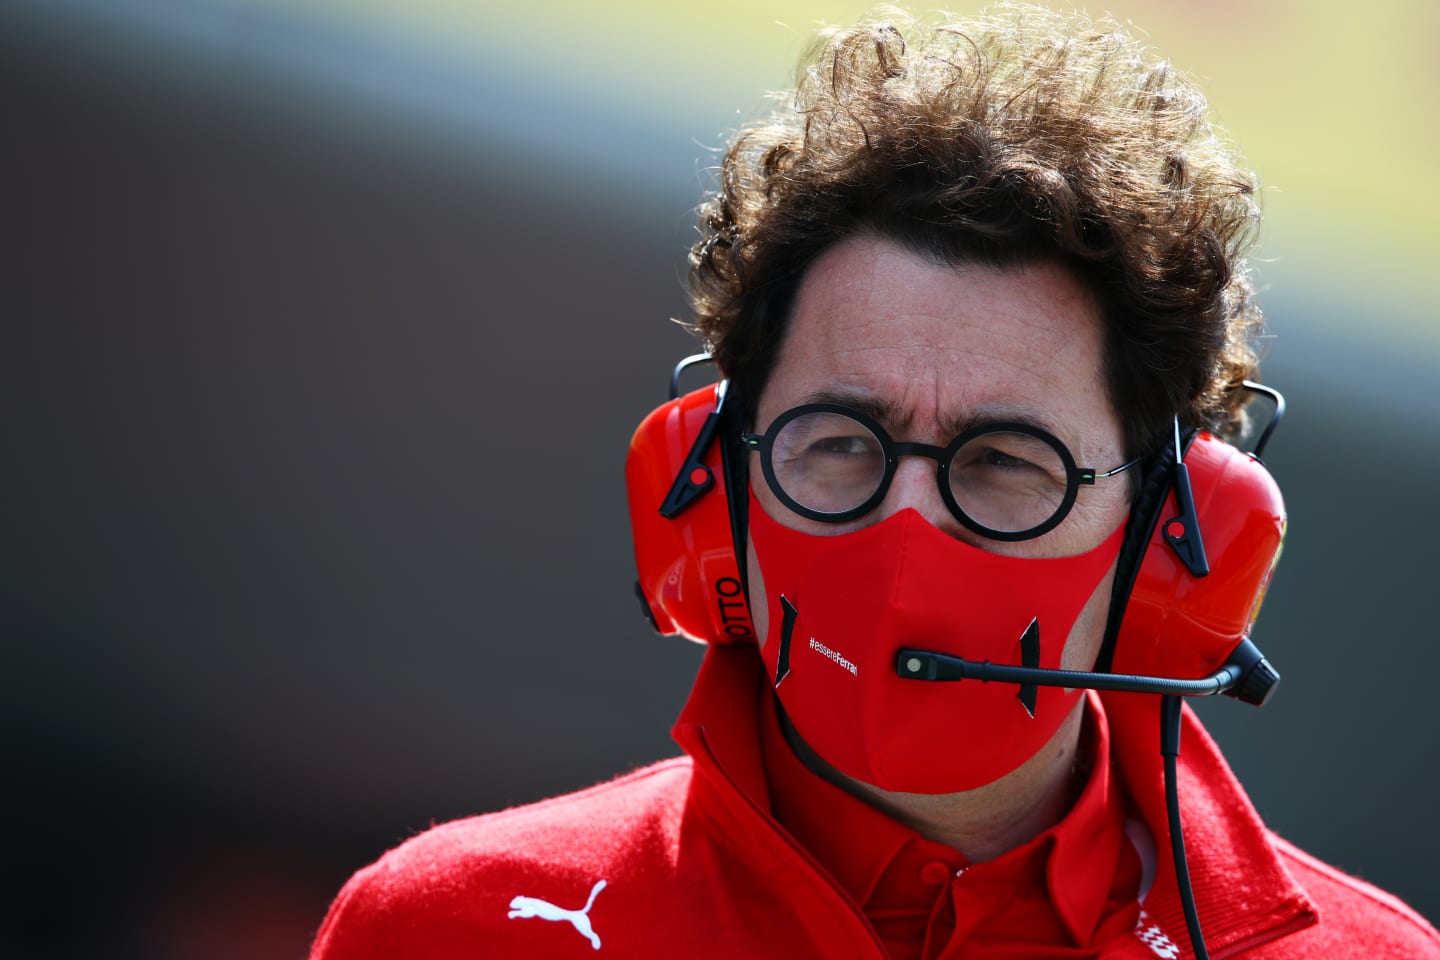 NORTHAMPTON, ENGLAND - AUGUST 09: Scuderia Ferrari Team Principal Mattia Binotto walks in the